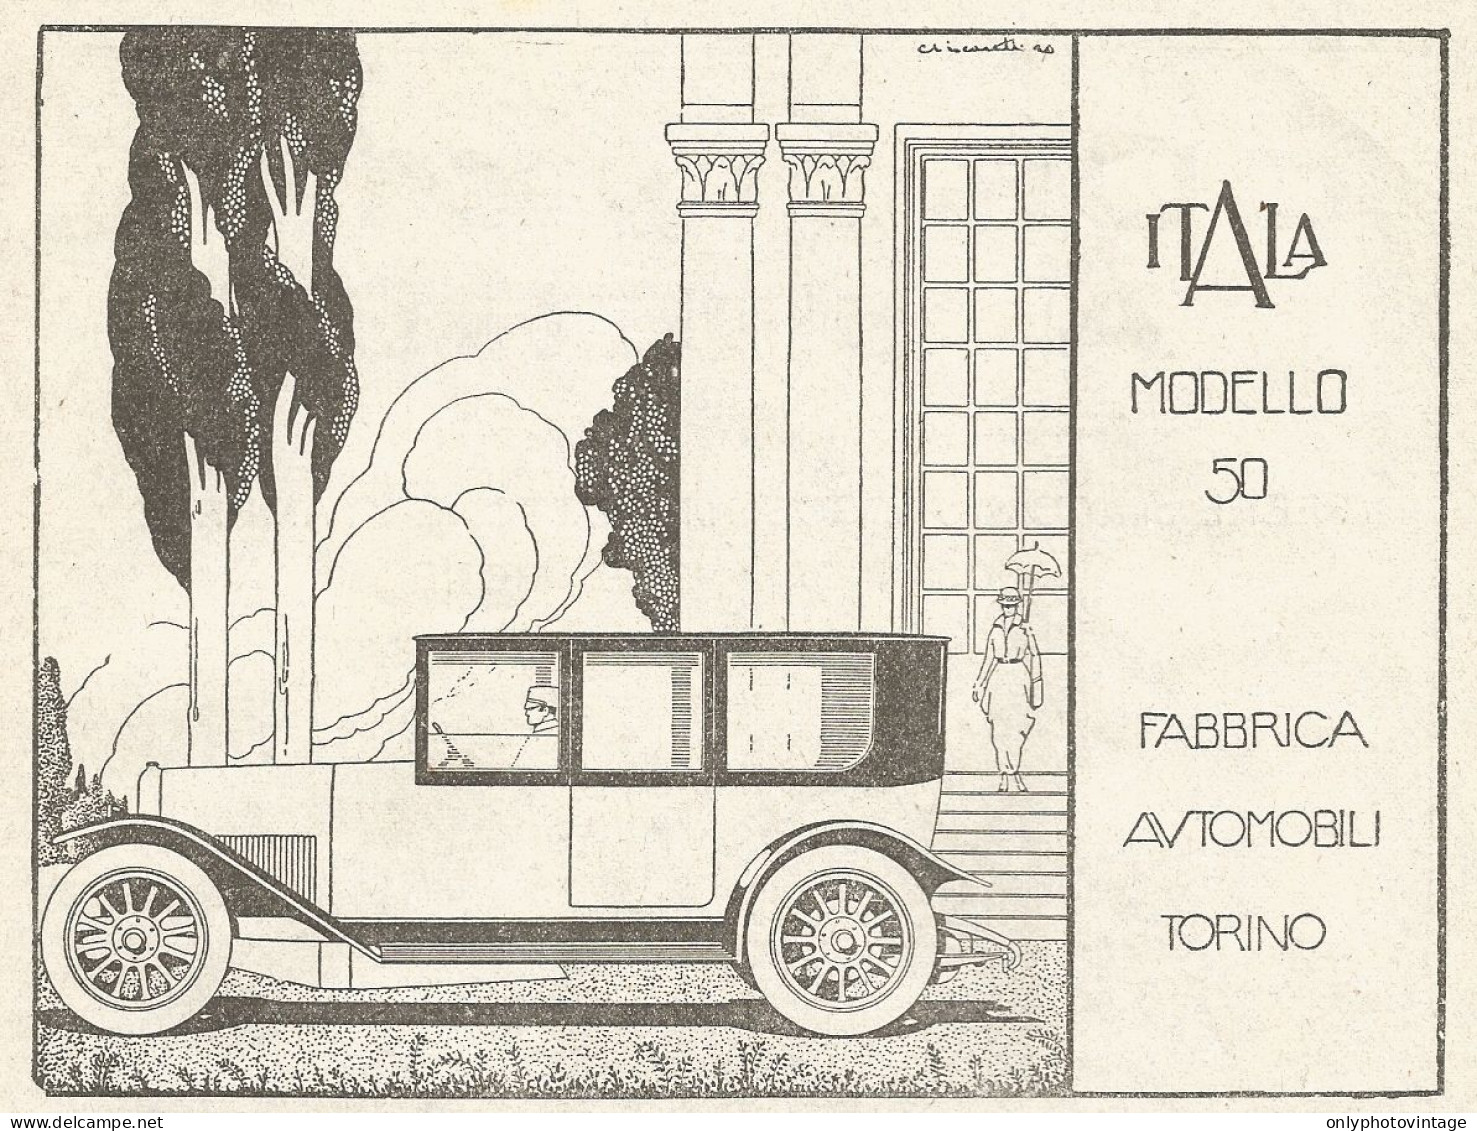 Automobile ITALA Modello 50 - Pubblicitï¿½ Del 1920 - Old Advertising - Advertising